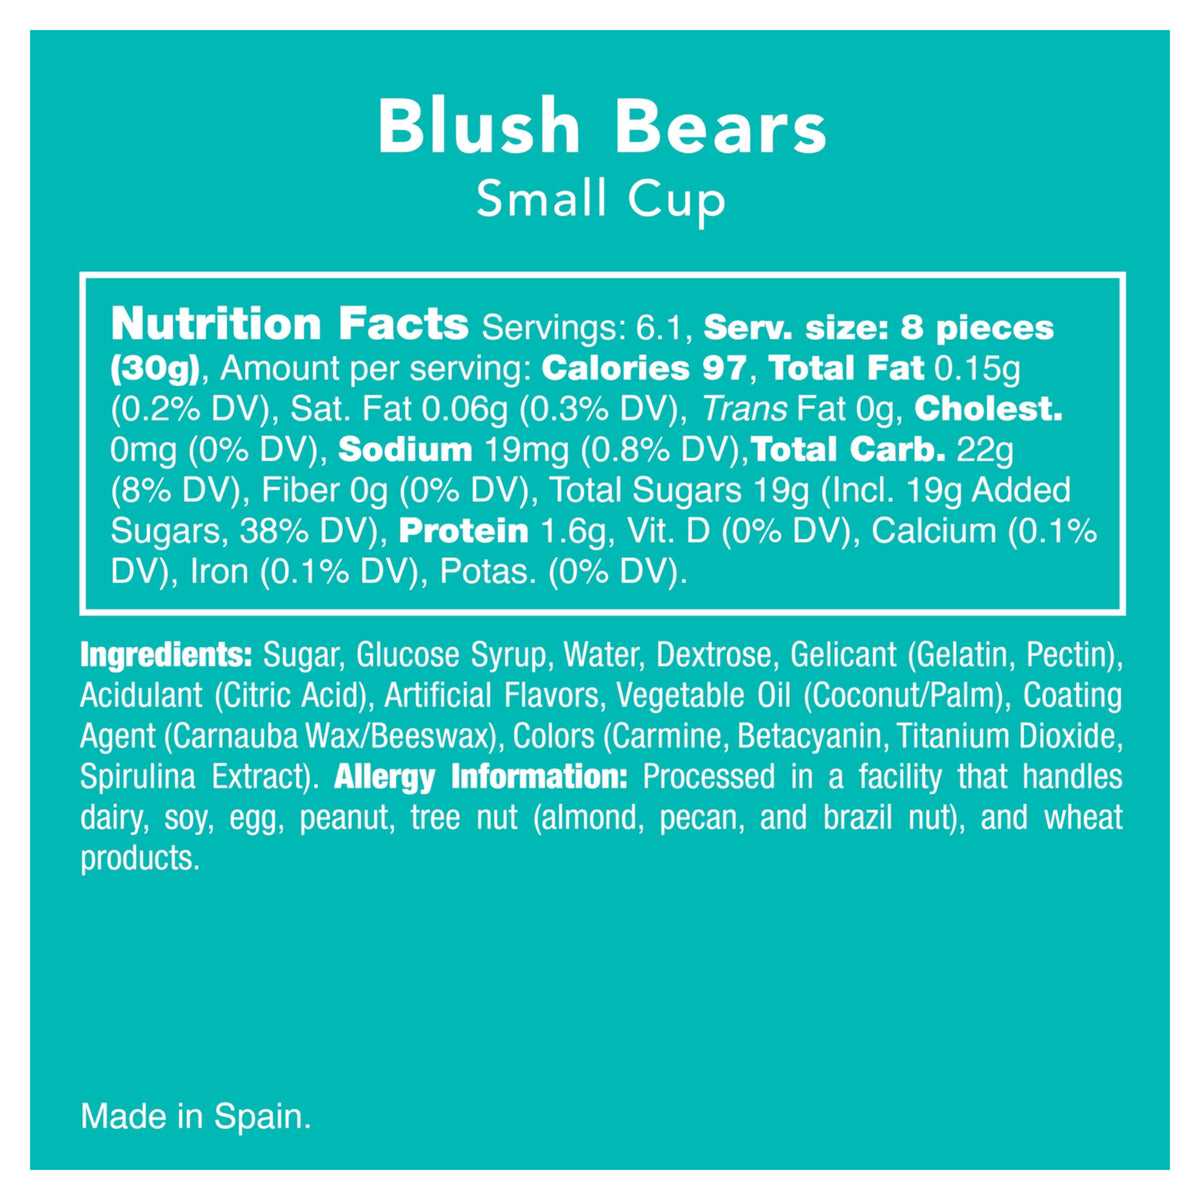 Blush Bears Candy Fruit Gummies - FINAL SALE